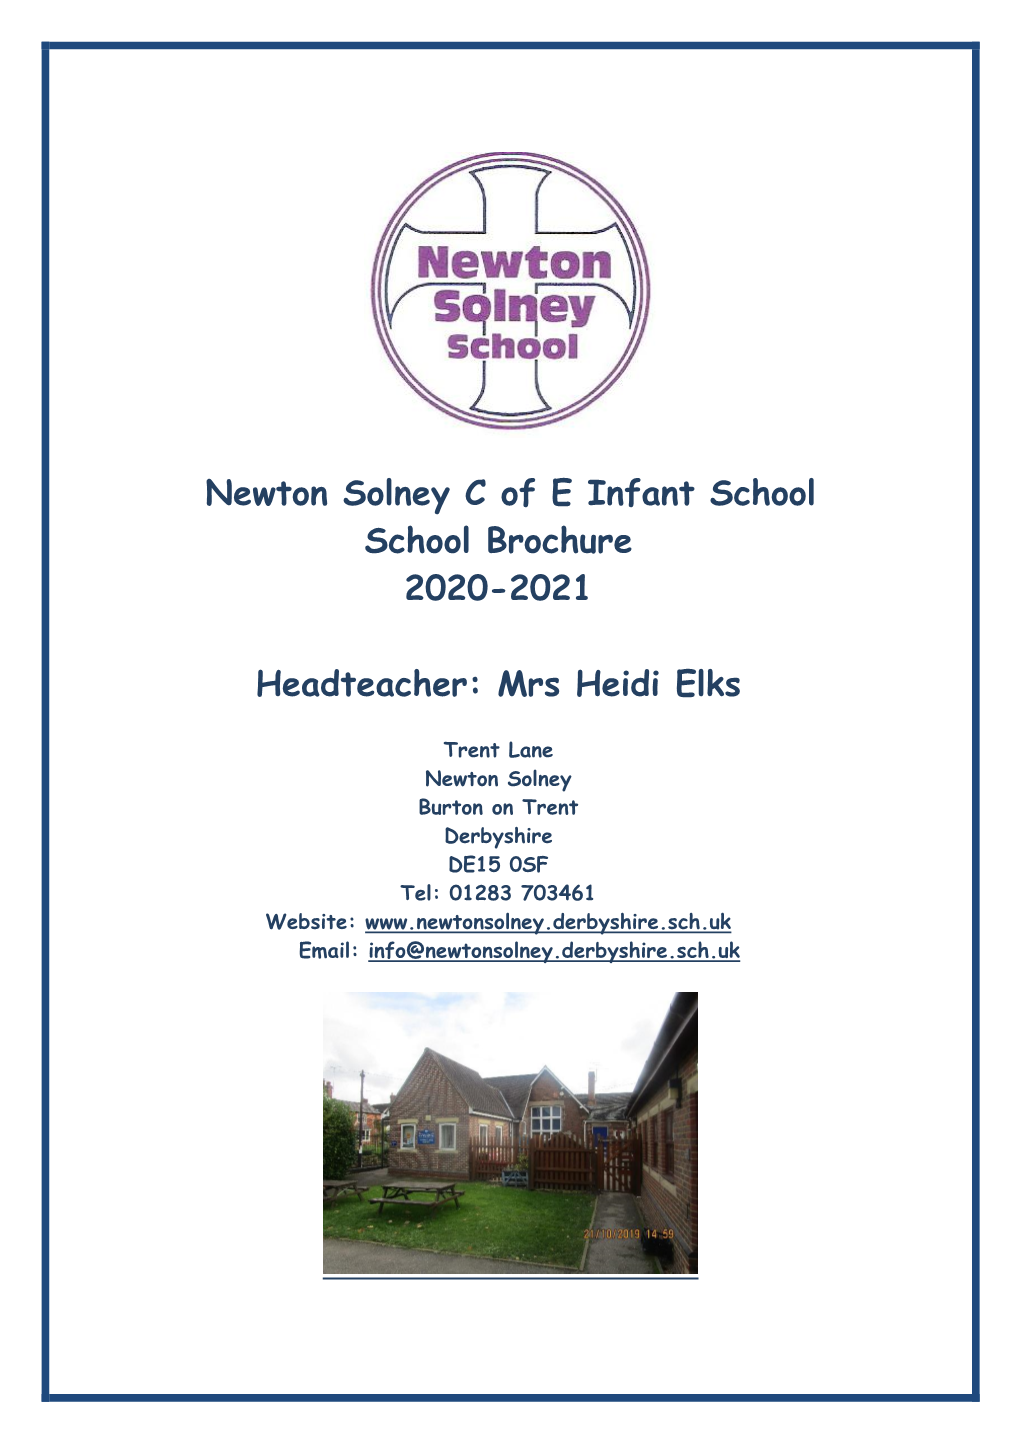 Newton Solney C of E Infant School School Brochure 2020-2021